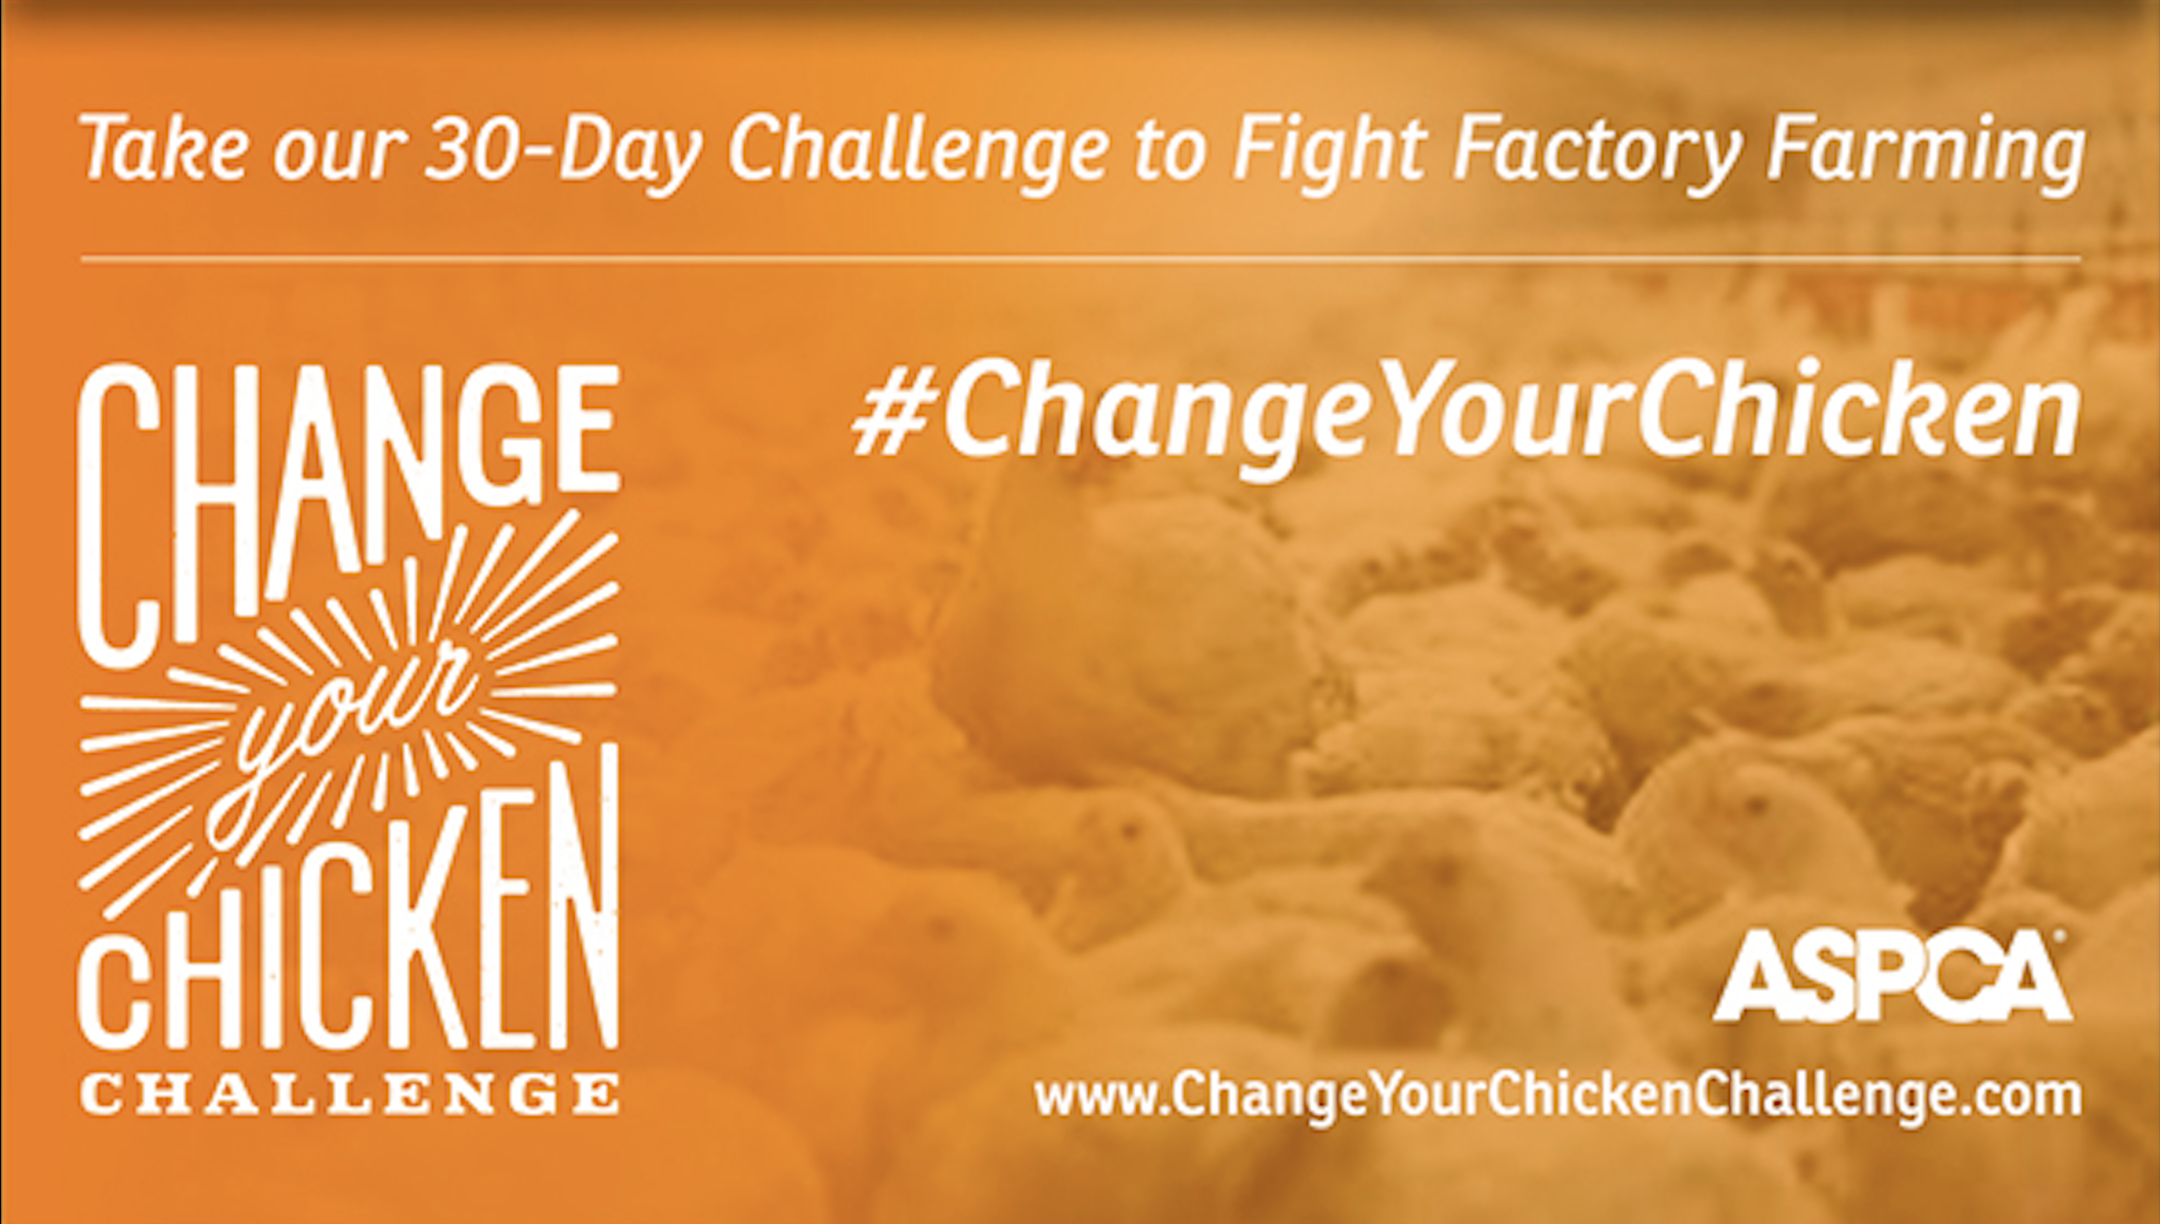 Change your chicken